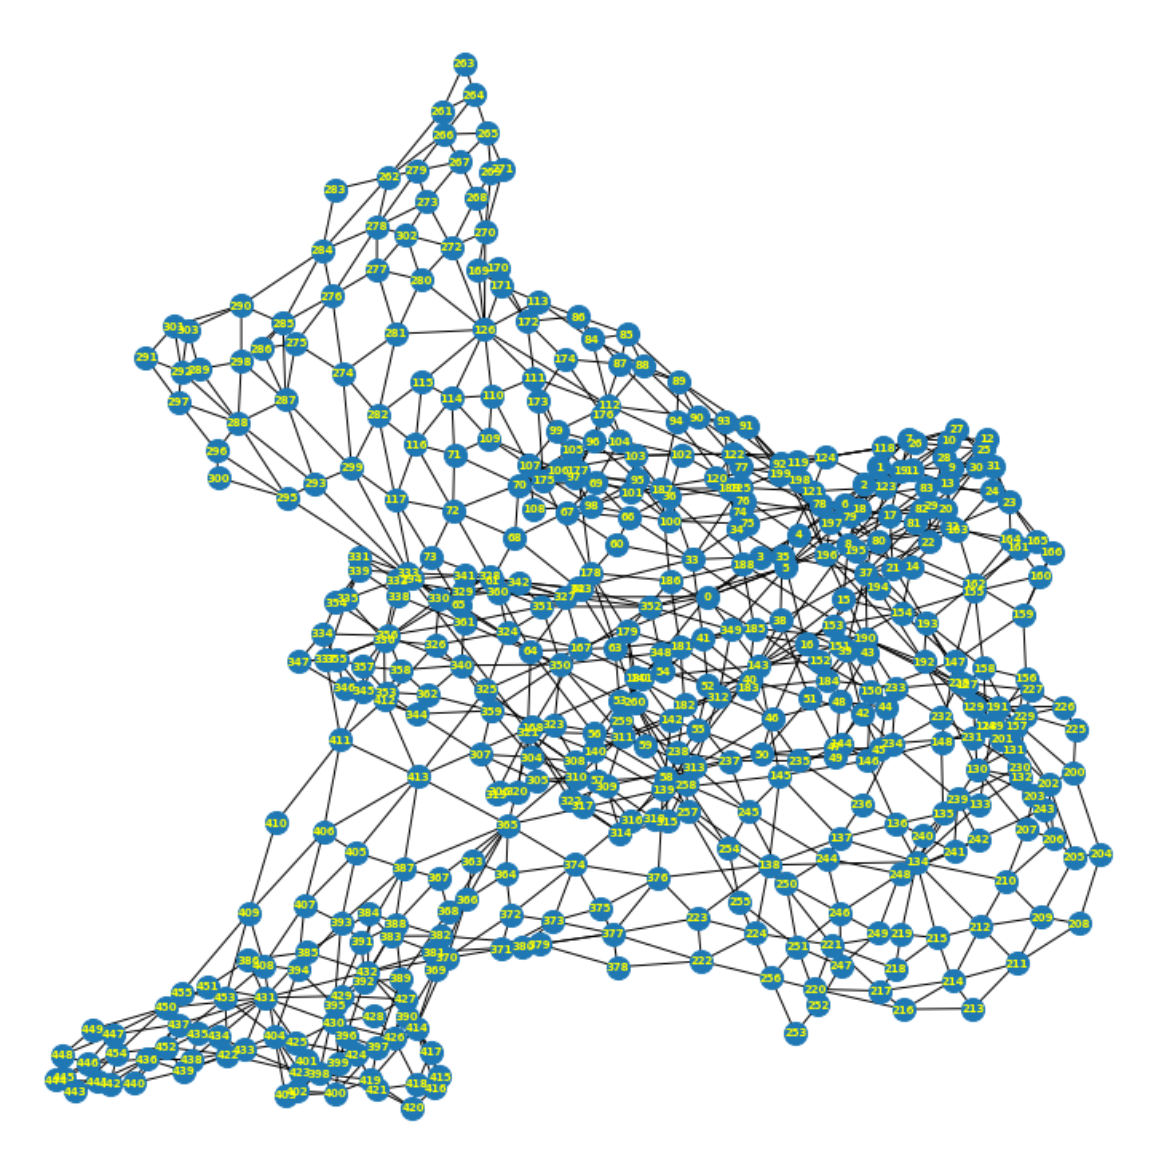 basic representation of the urban network